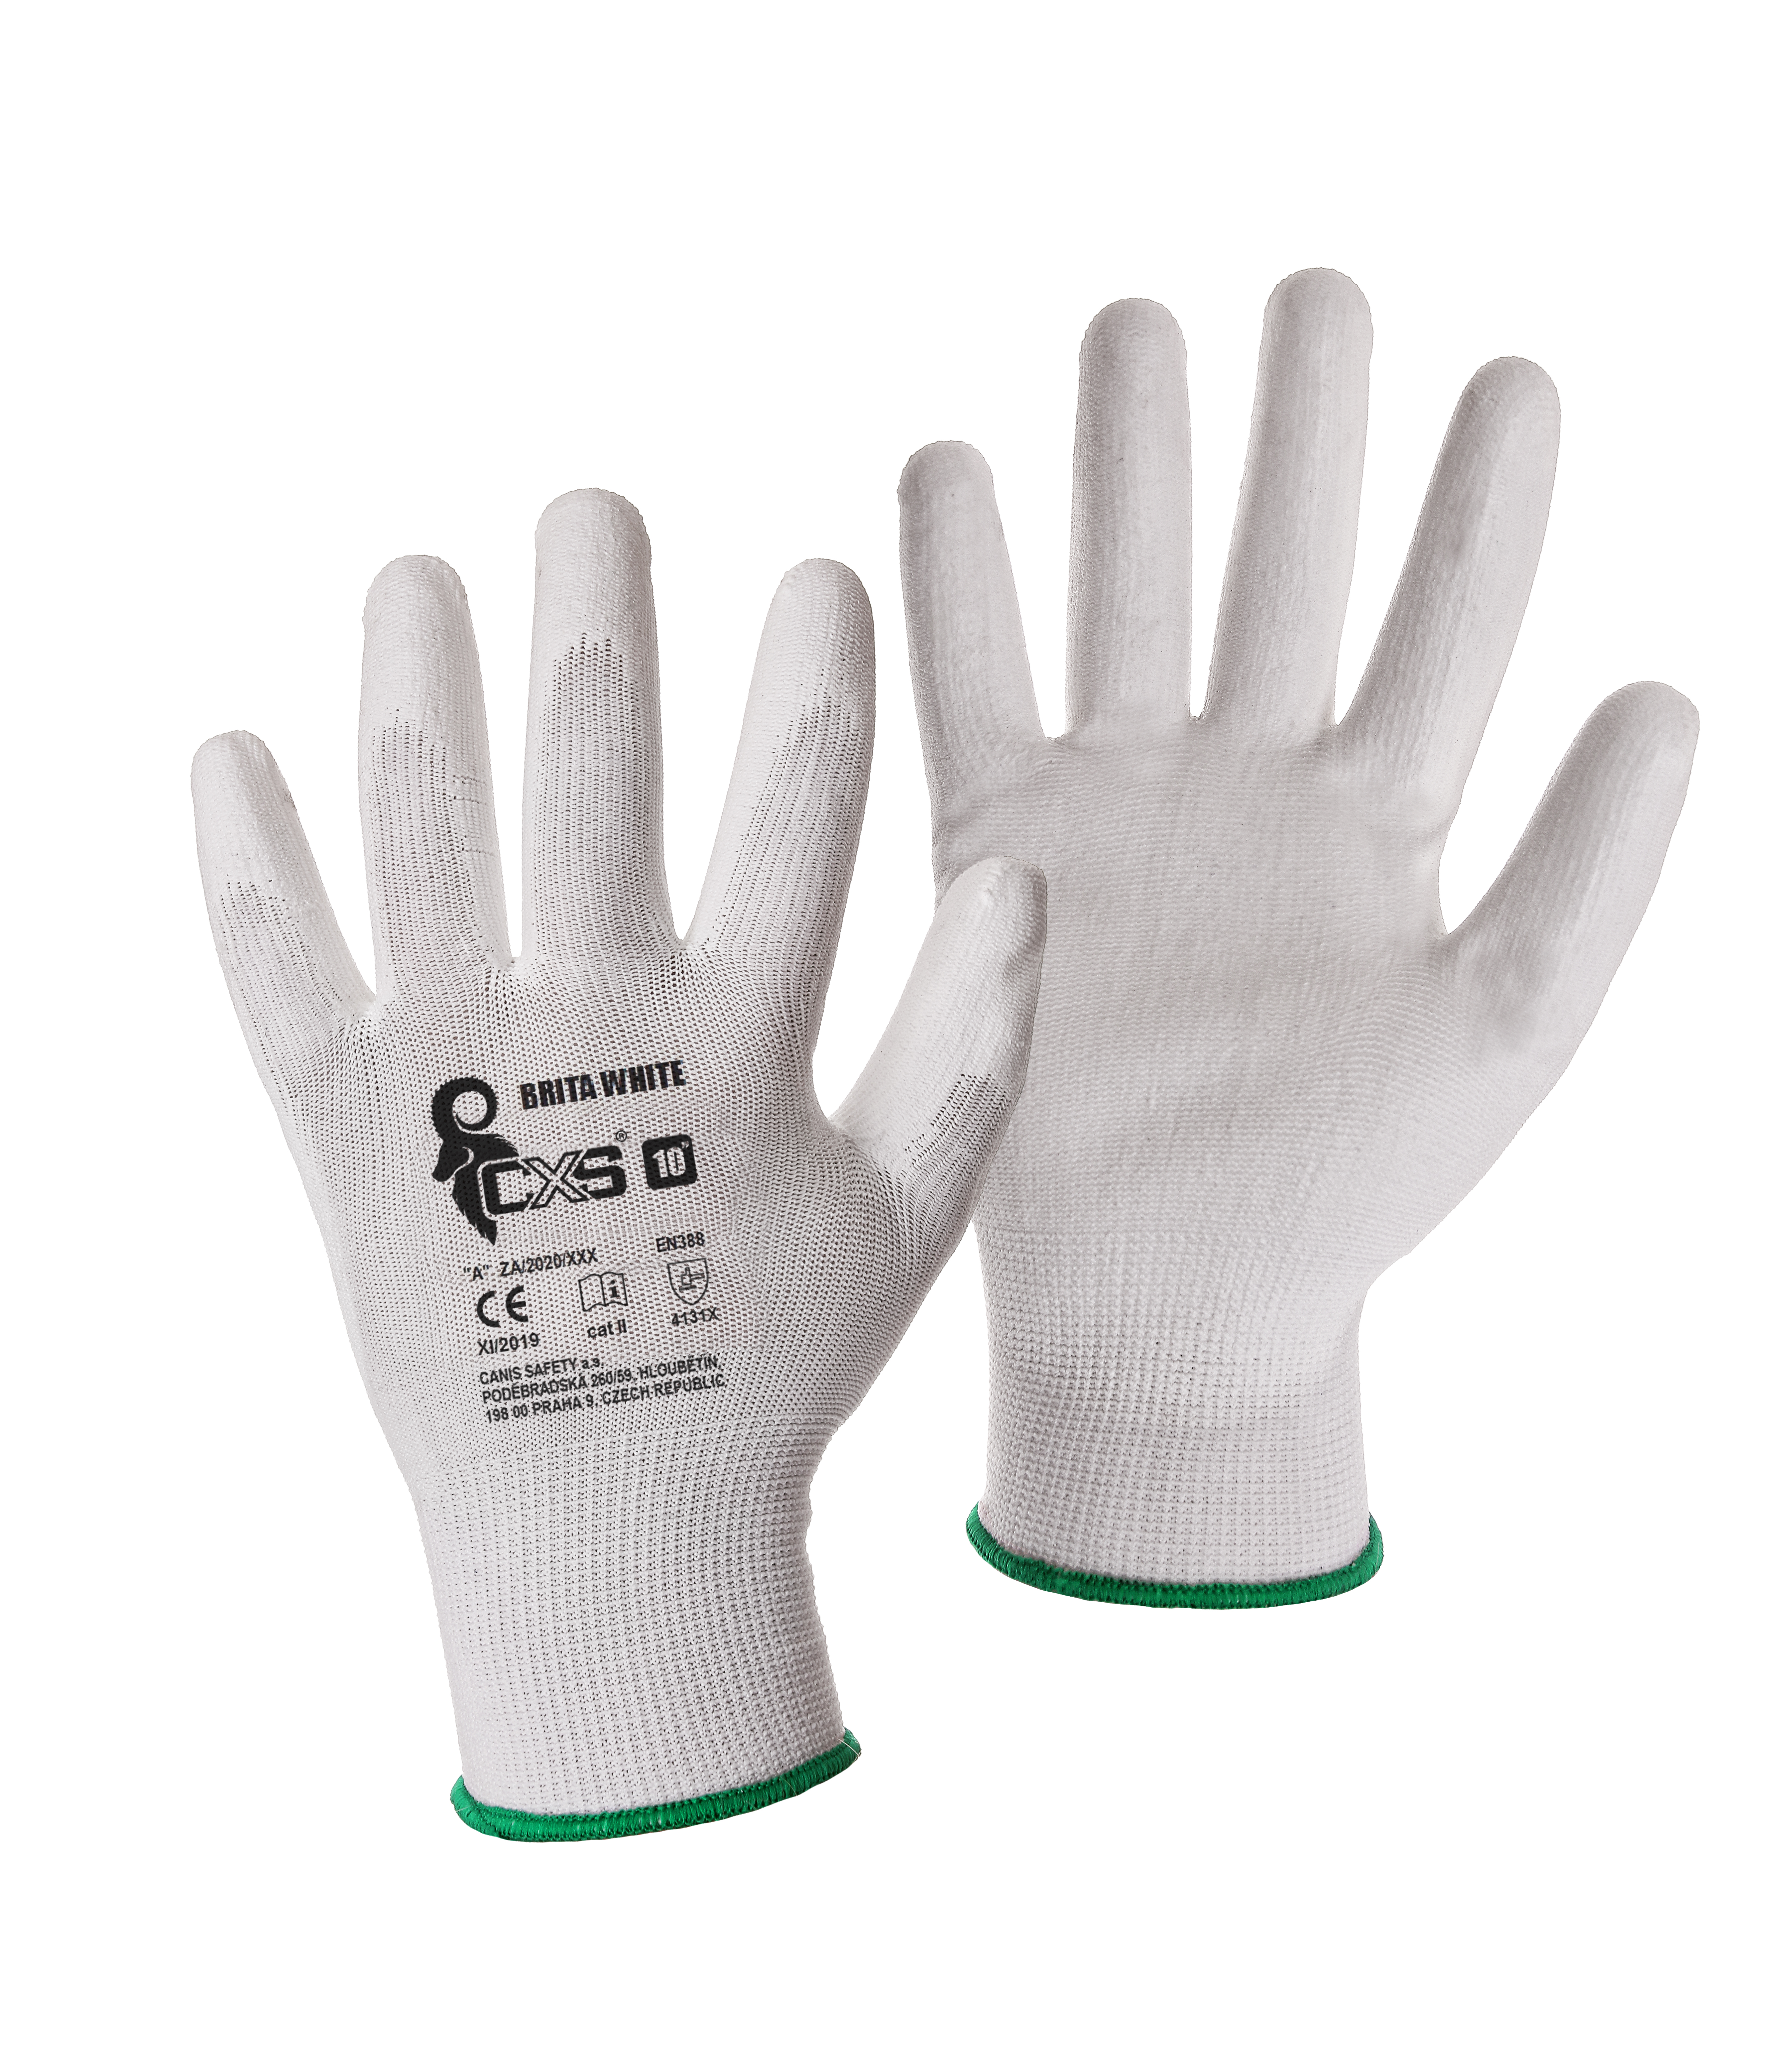 rukavice BRITA WHITE, s PU dlaní a úpletem, velikost 9 0.02 Kg TOP Sklad4 606043 175